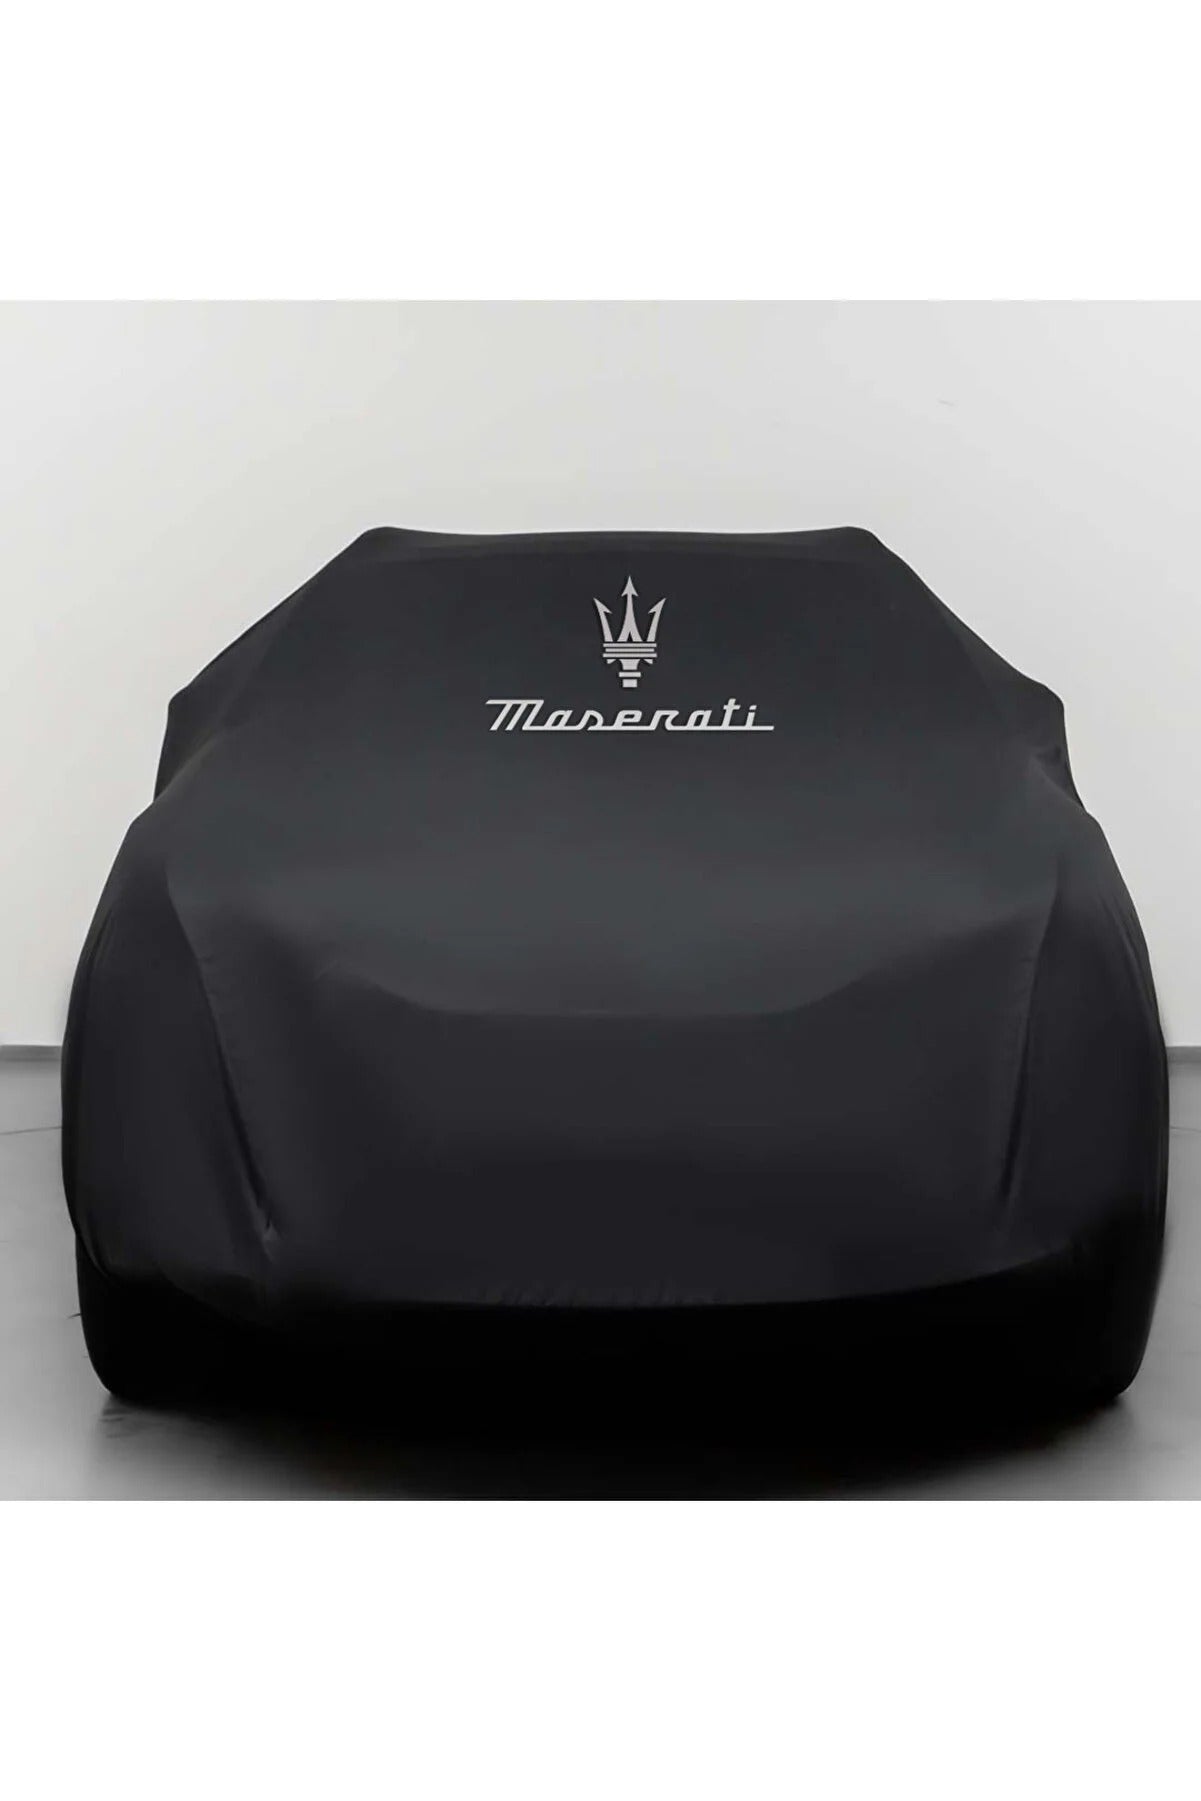 Funda para coche MASERATİ, hecha a medida para su vehículo, funda para coche MASERATİ ✅ Protector de coche para todos los modelos MASERATİ ✅